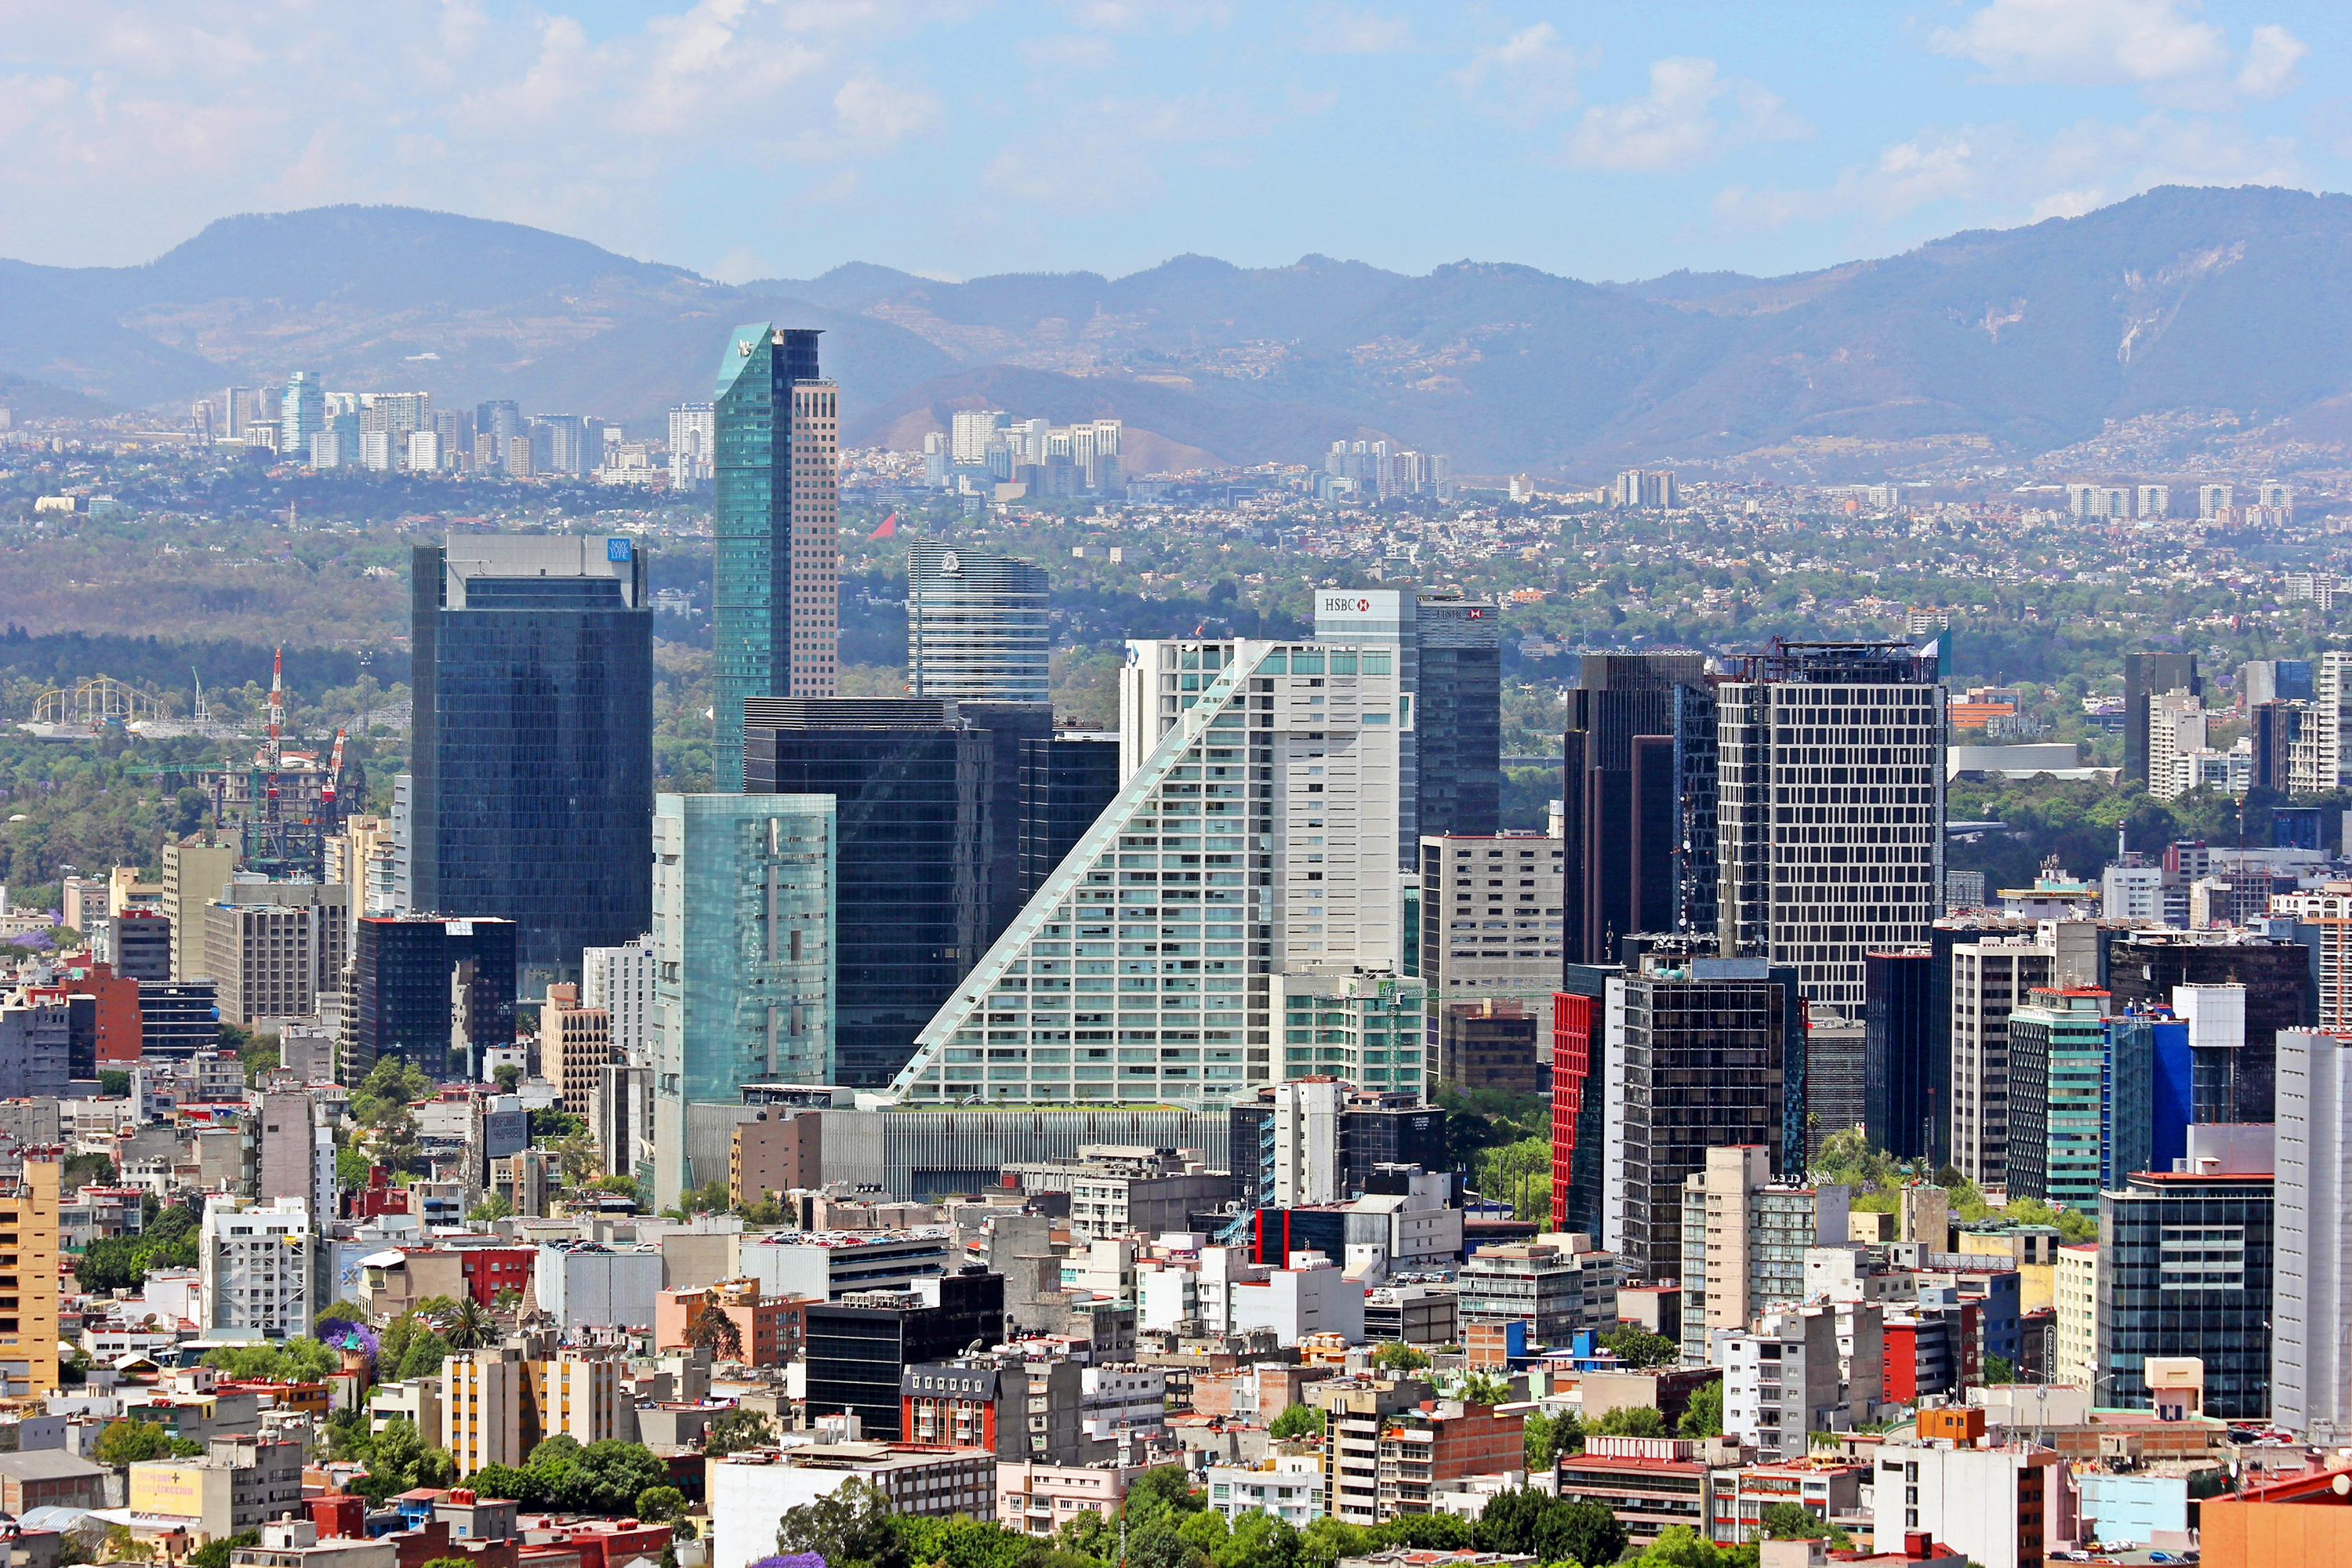 Skyline of Mexico City